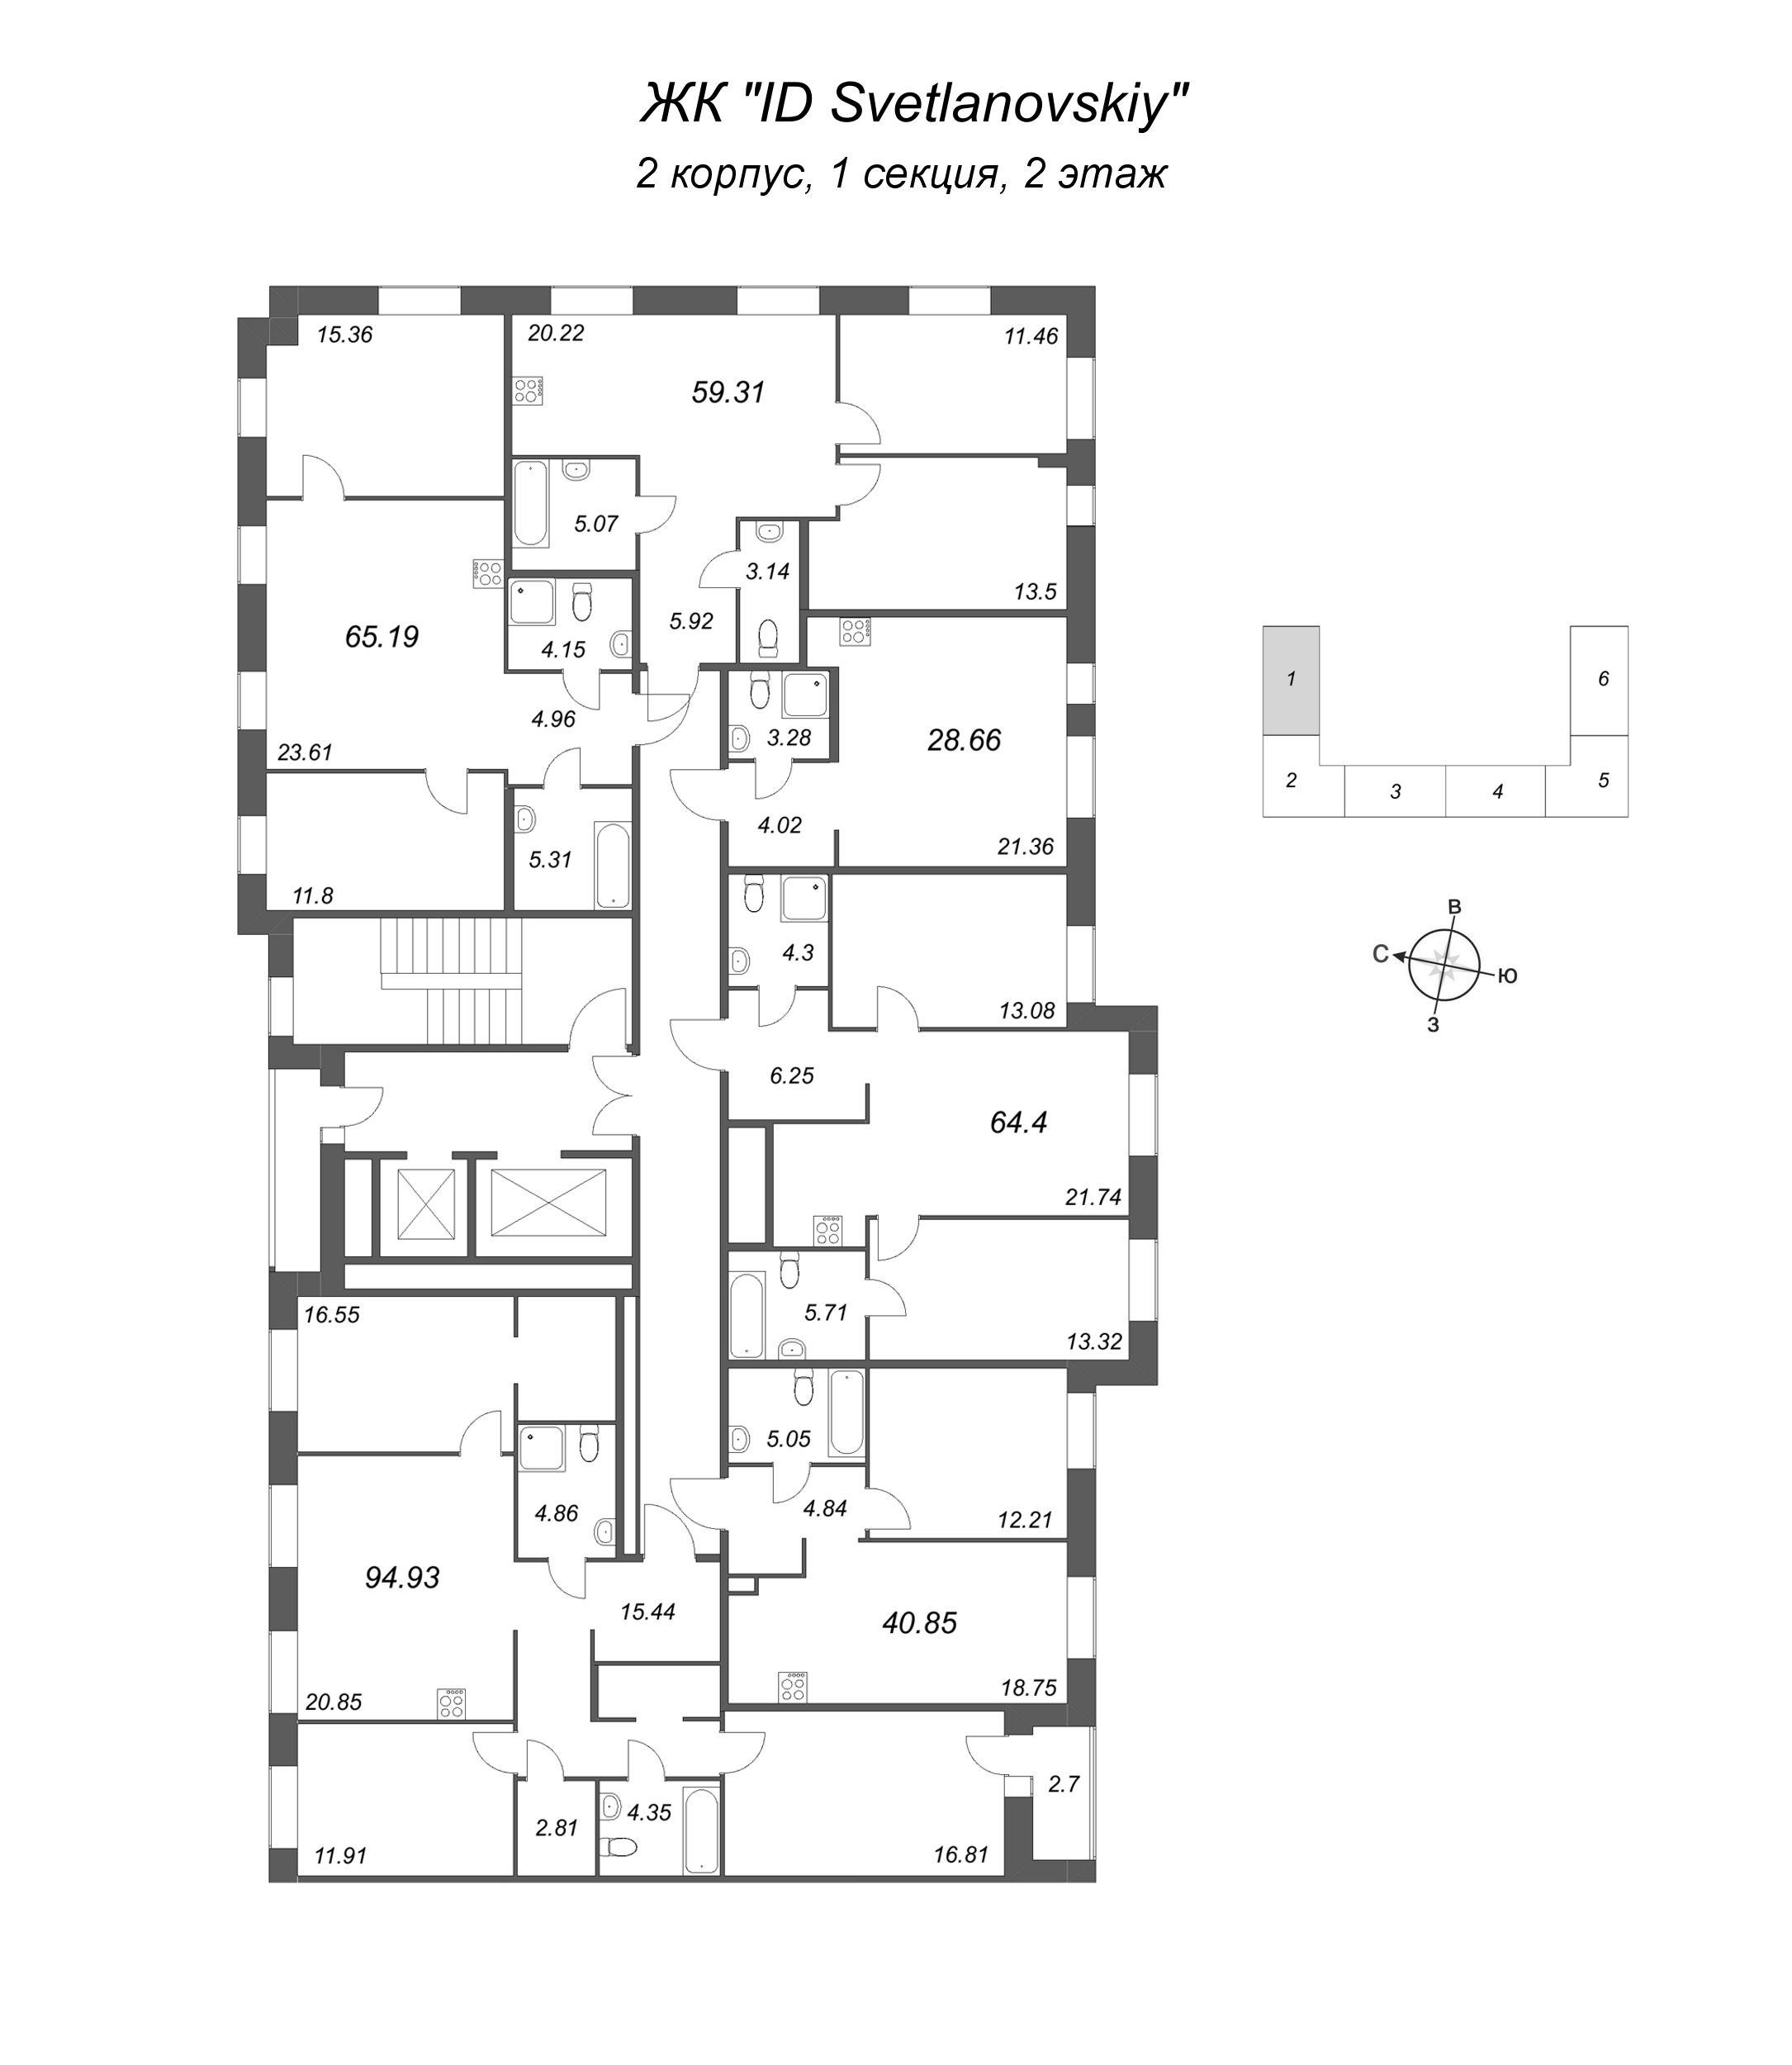 3-комнатная (Евро) квартира, 59.31 м² - планировка этажа